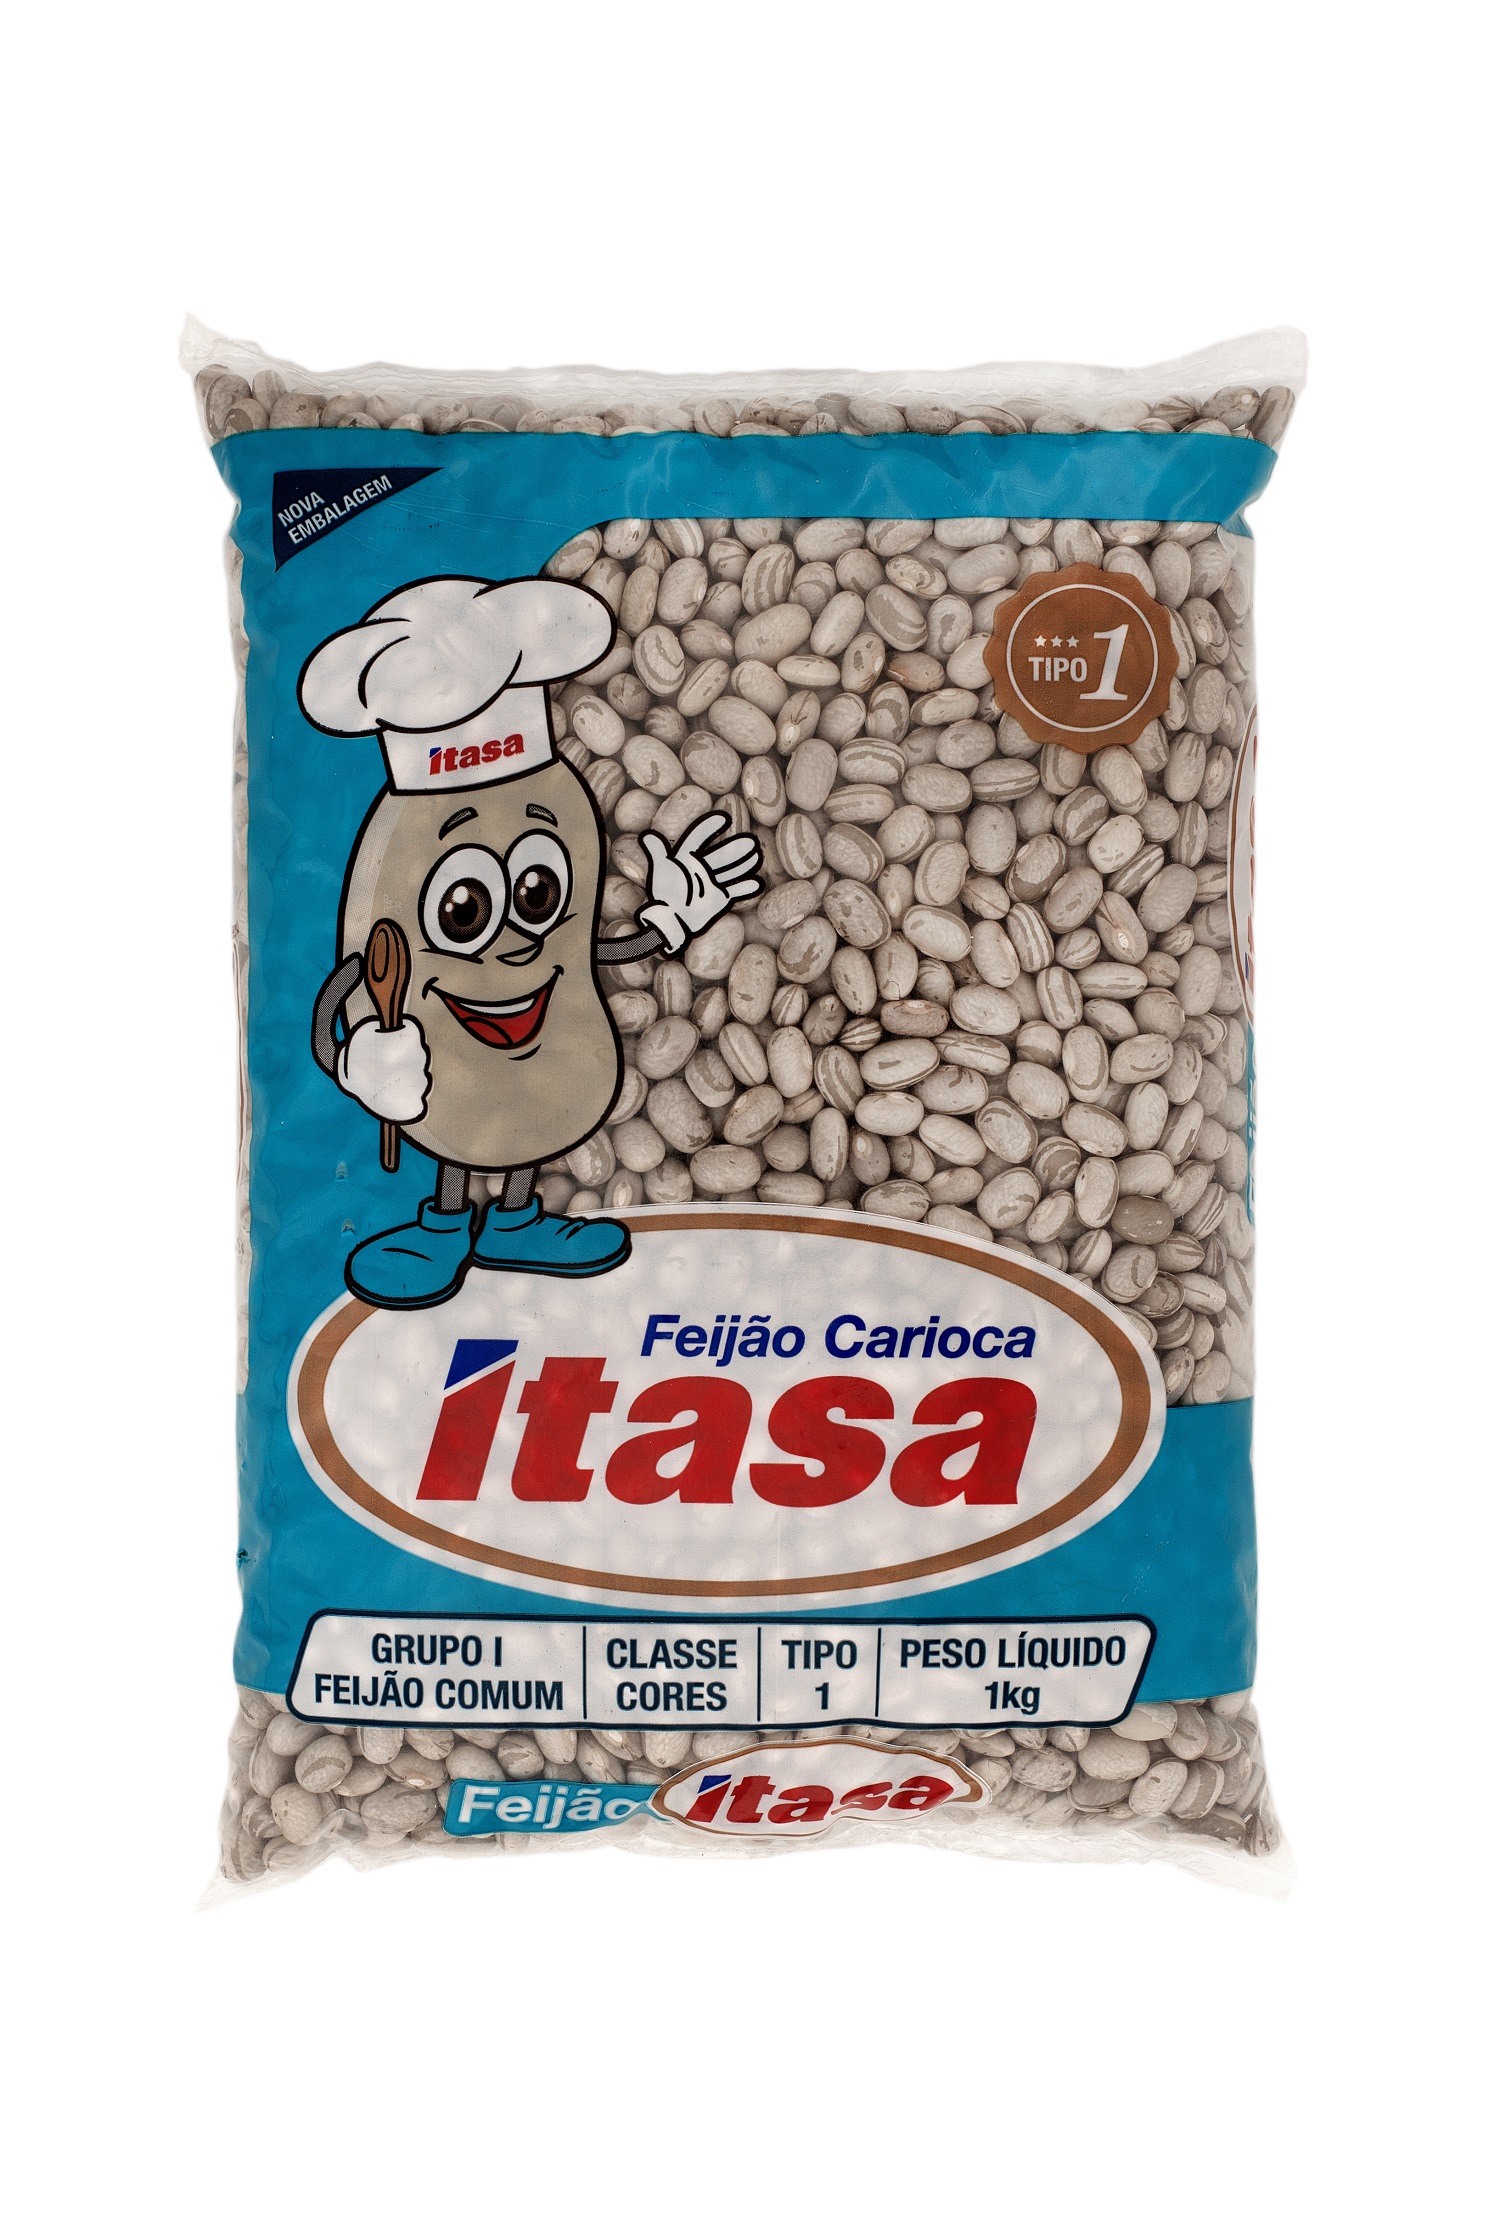 Itasa Alimentos - Indústria alimentar